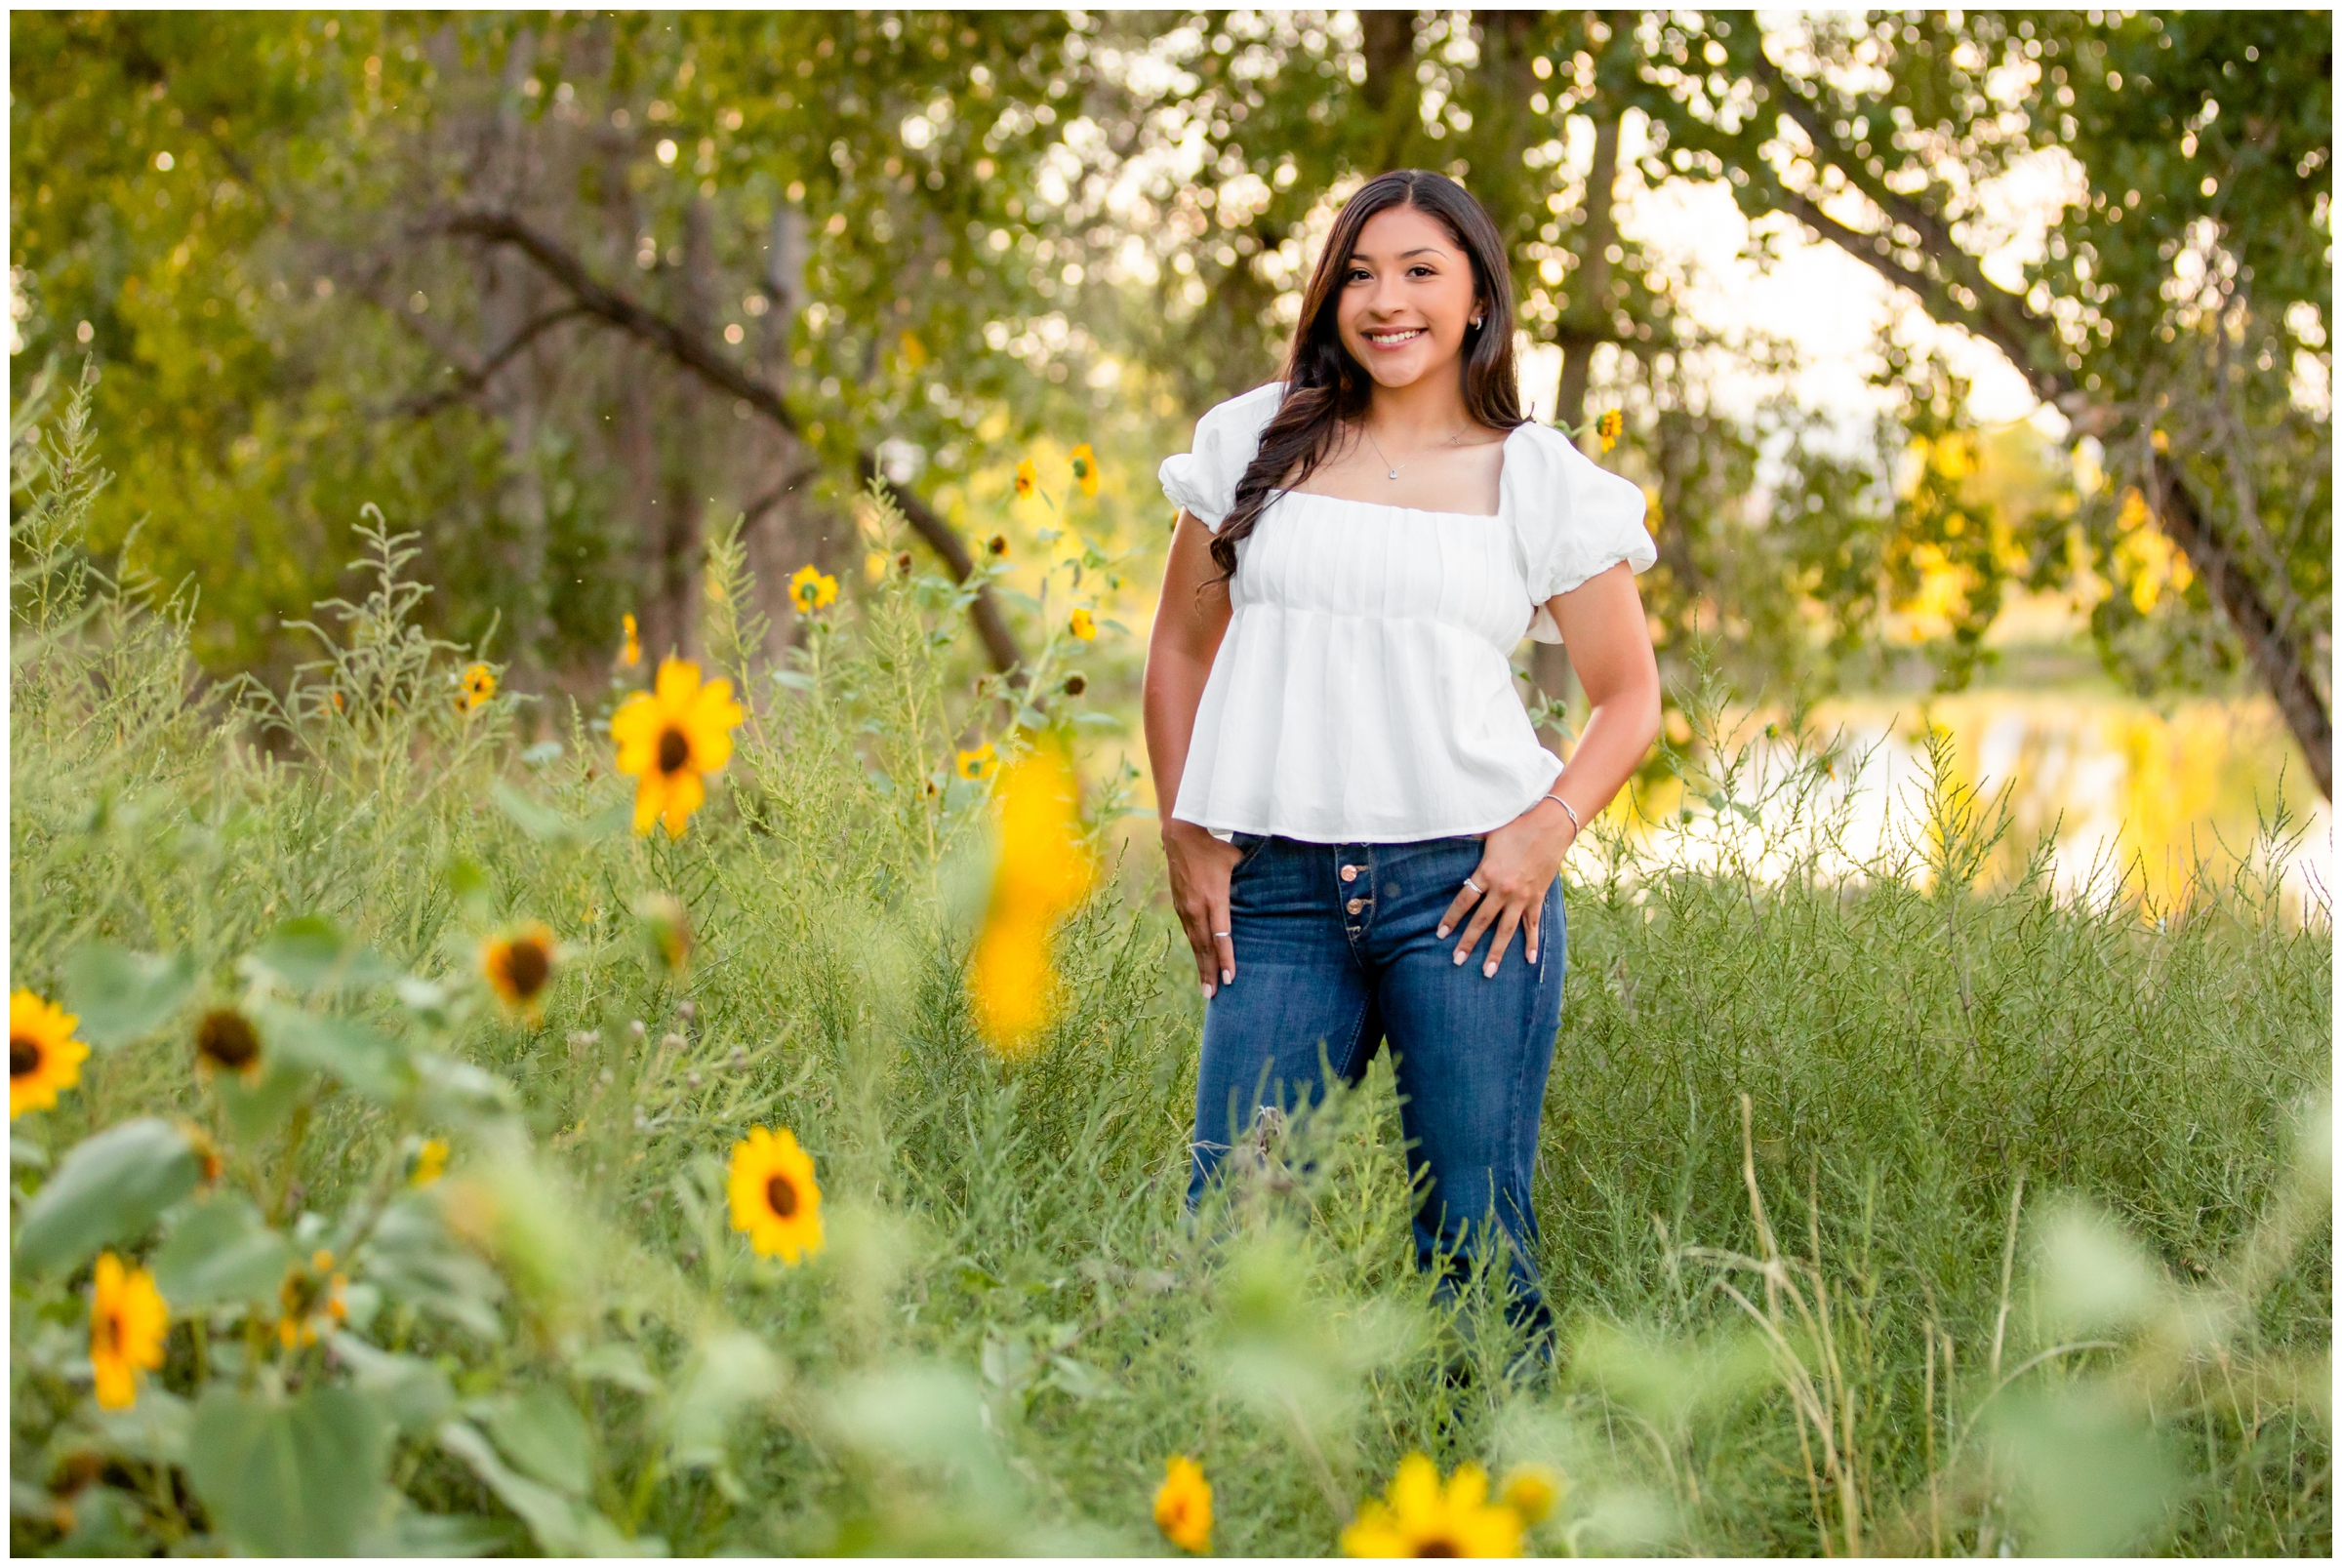 Colorado graduation photo session in a sunflower field 